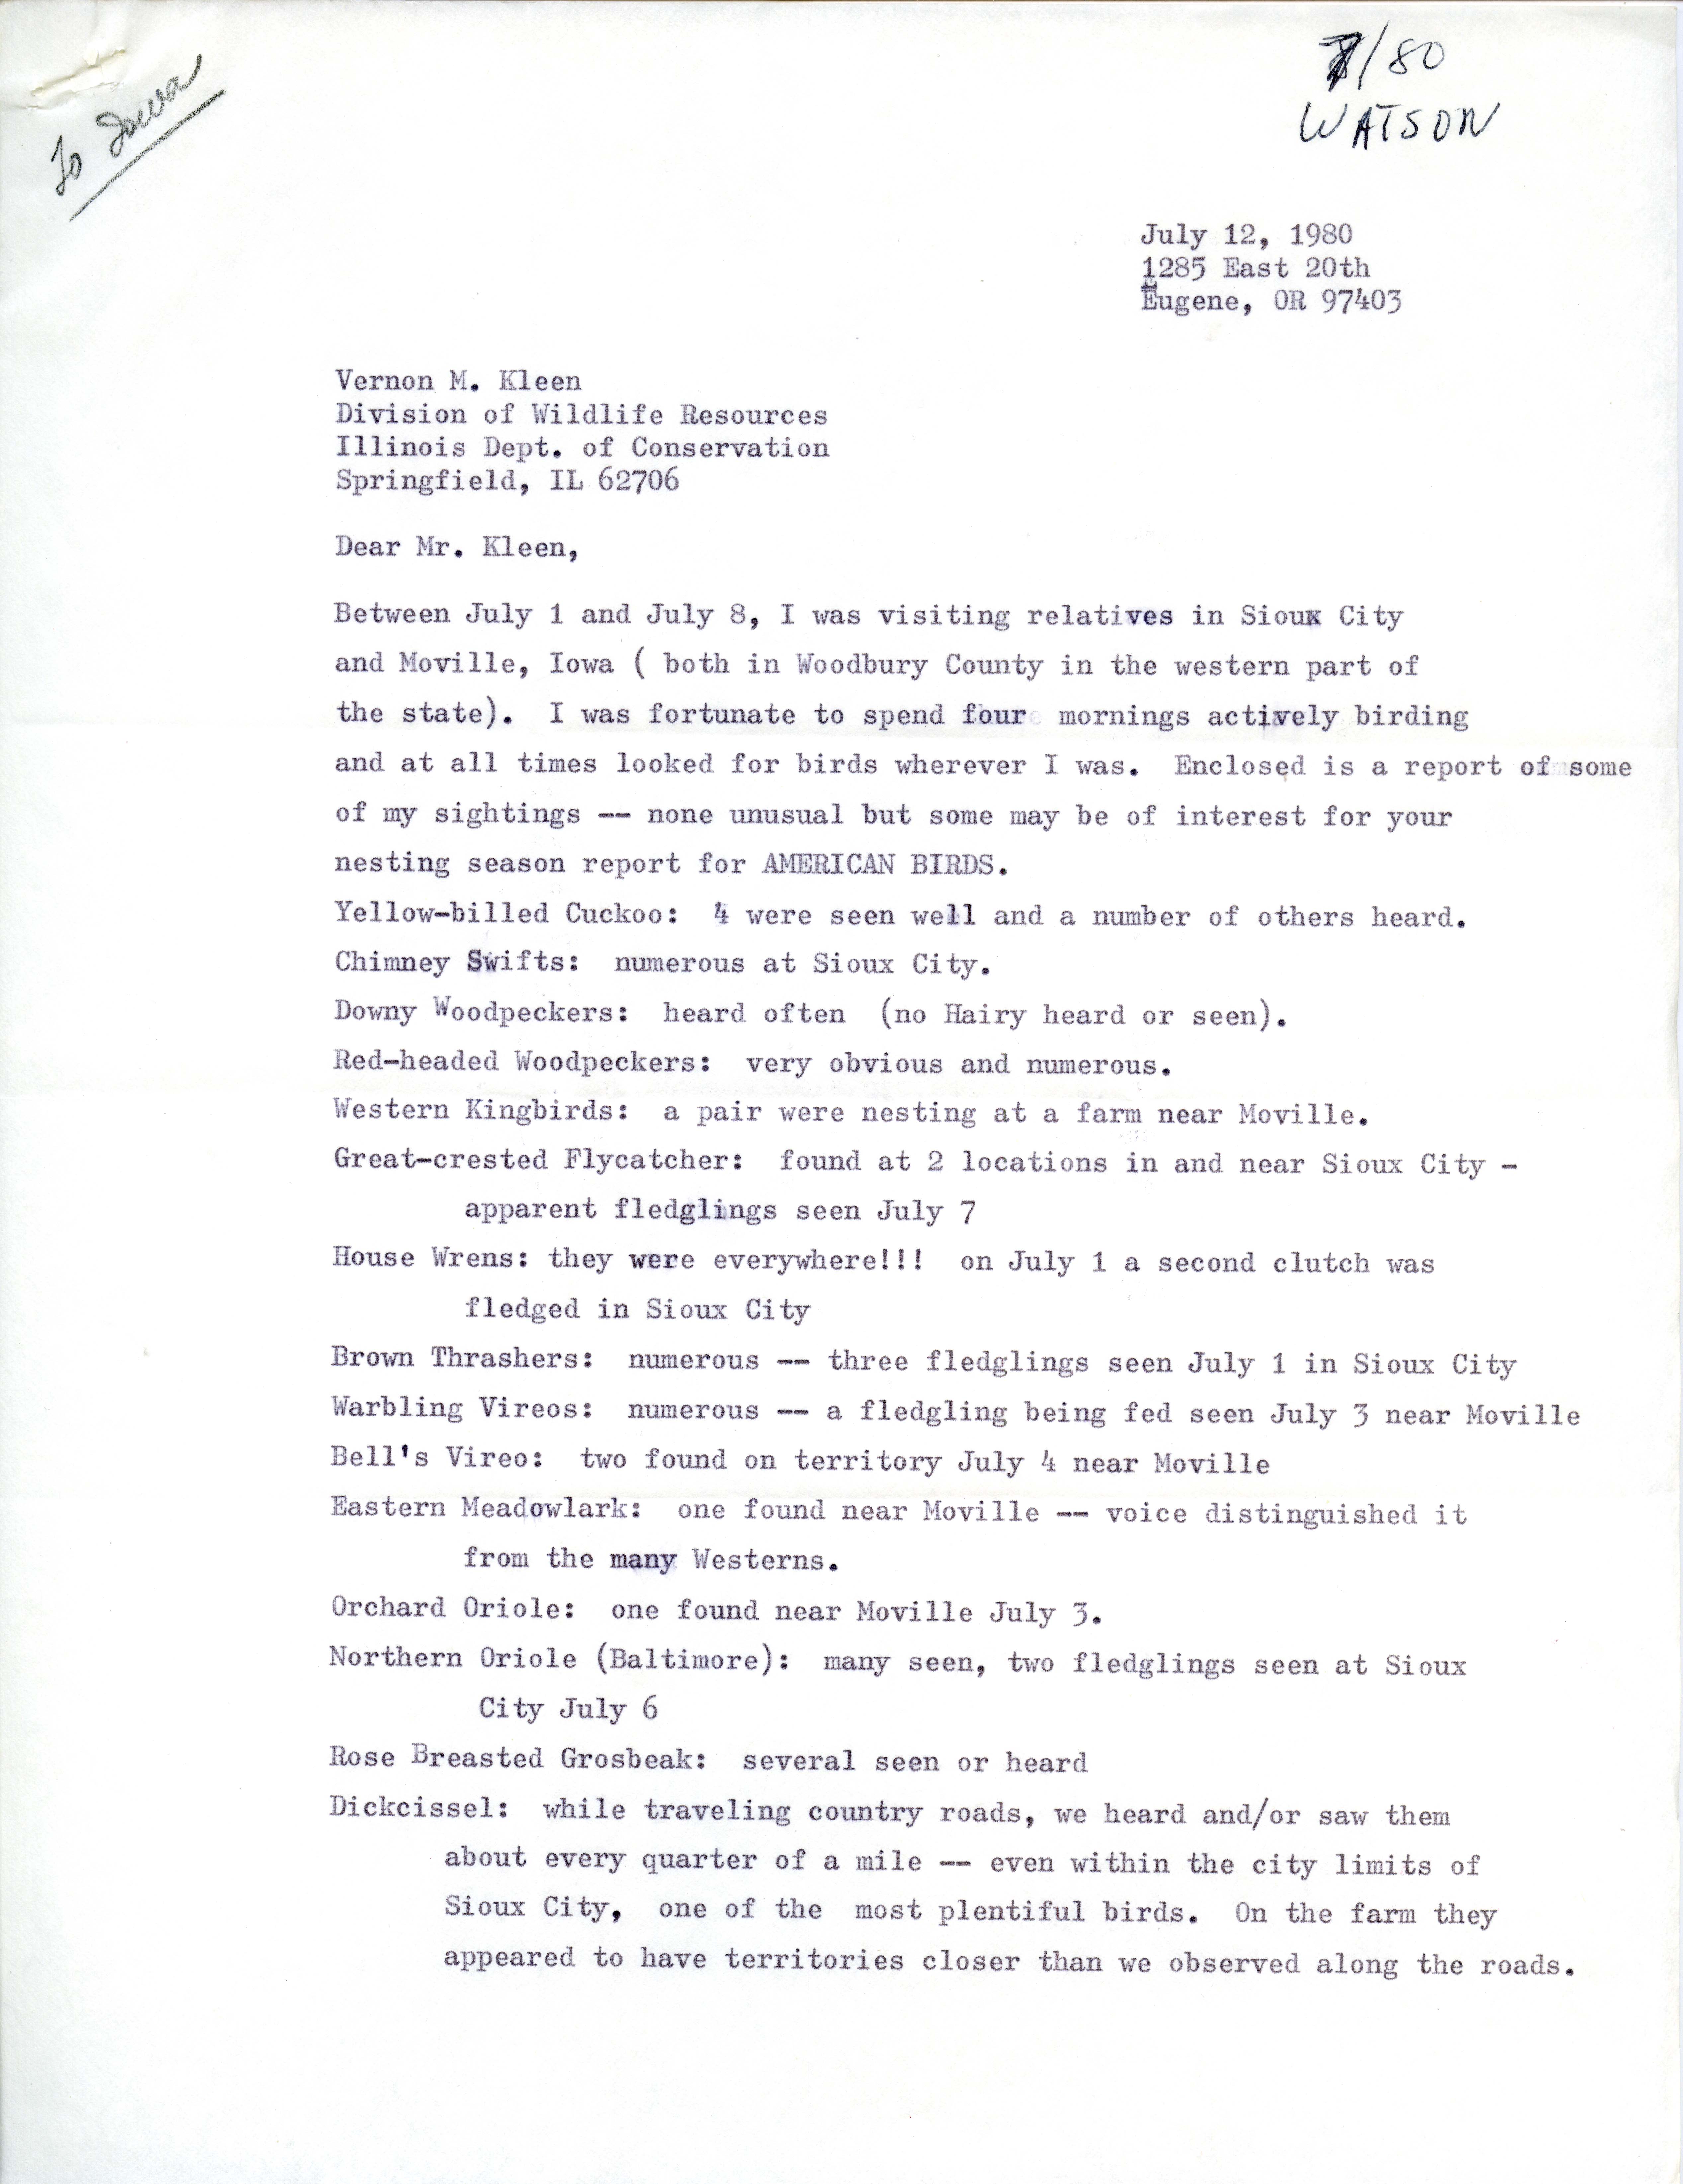 Clarice Watson letter to Vernon M. Kleen regarding bird sightings, July 12, 1980